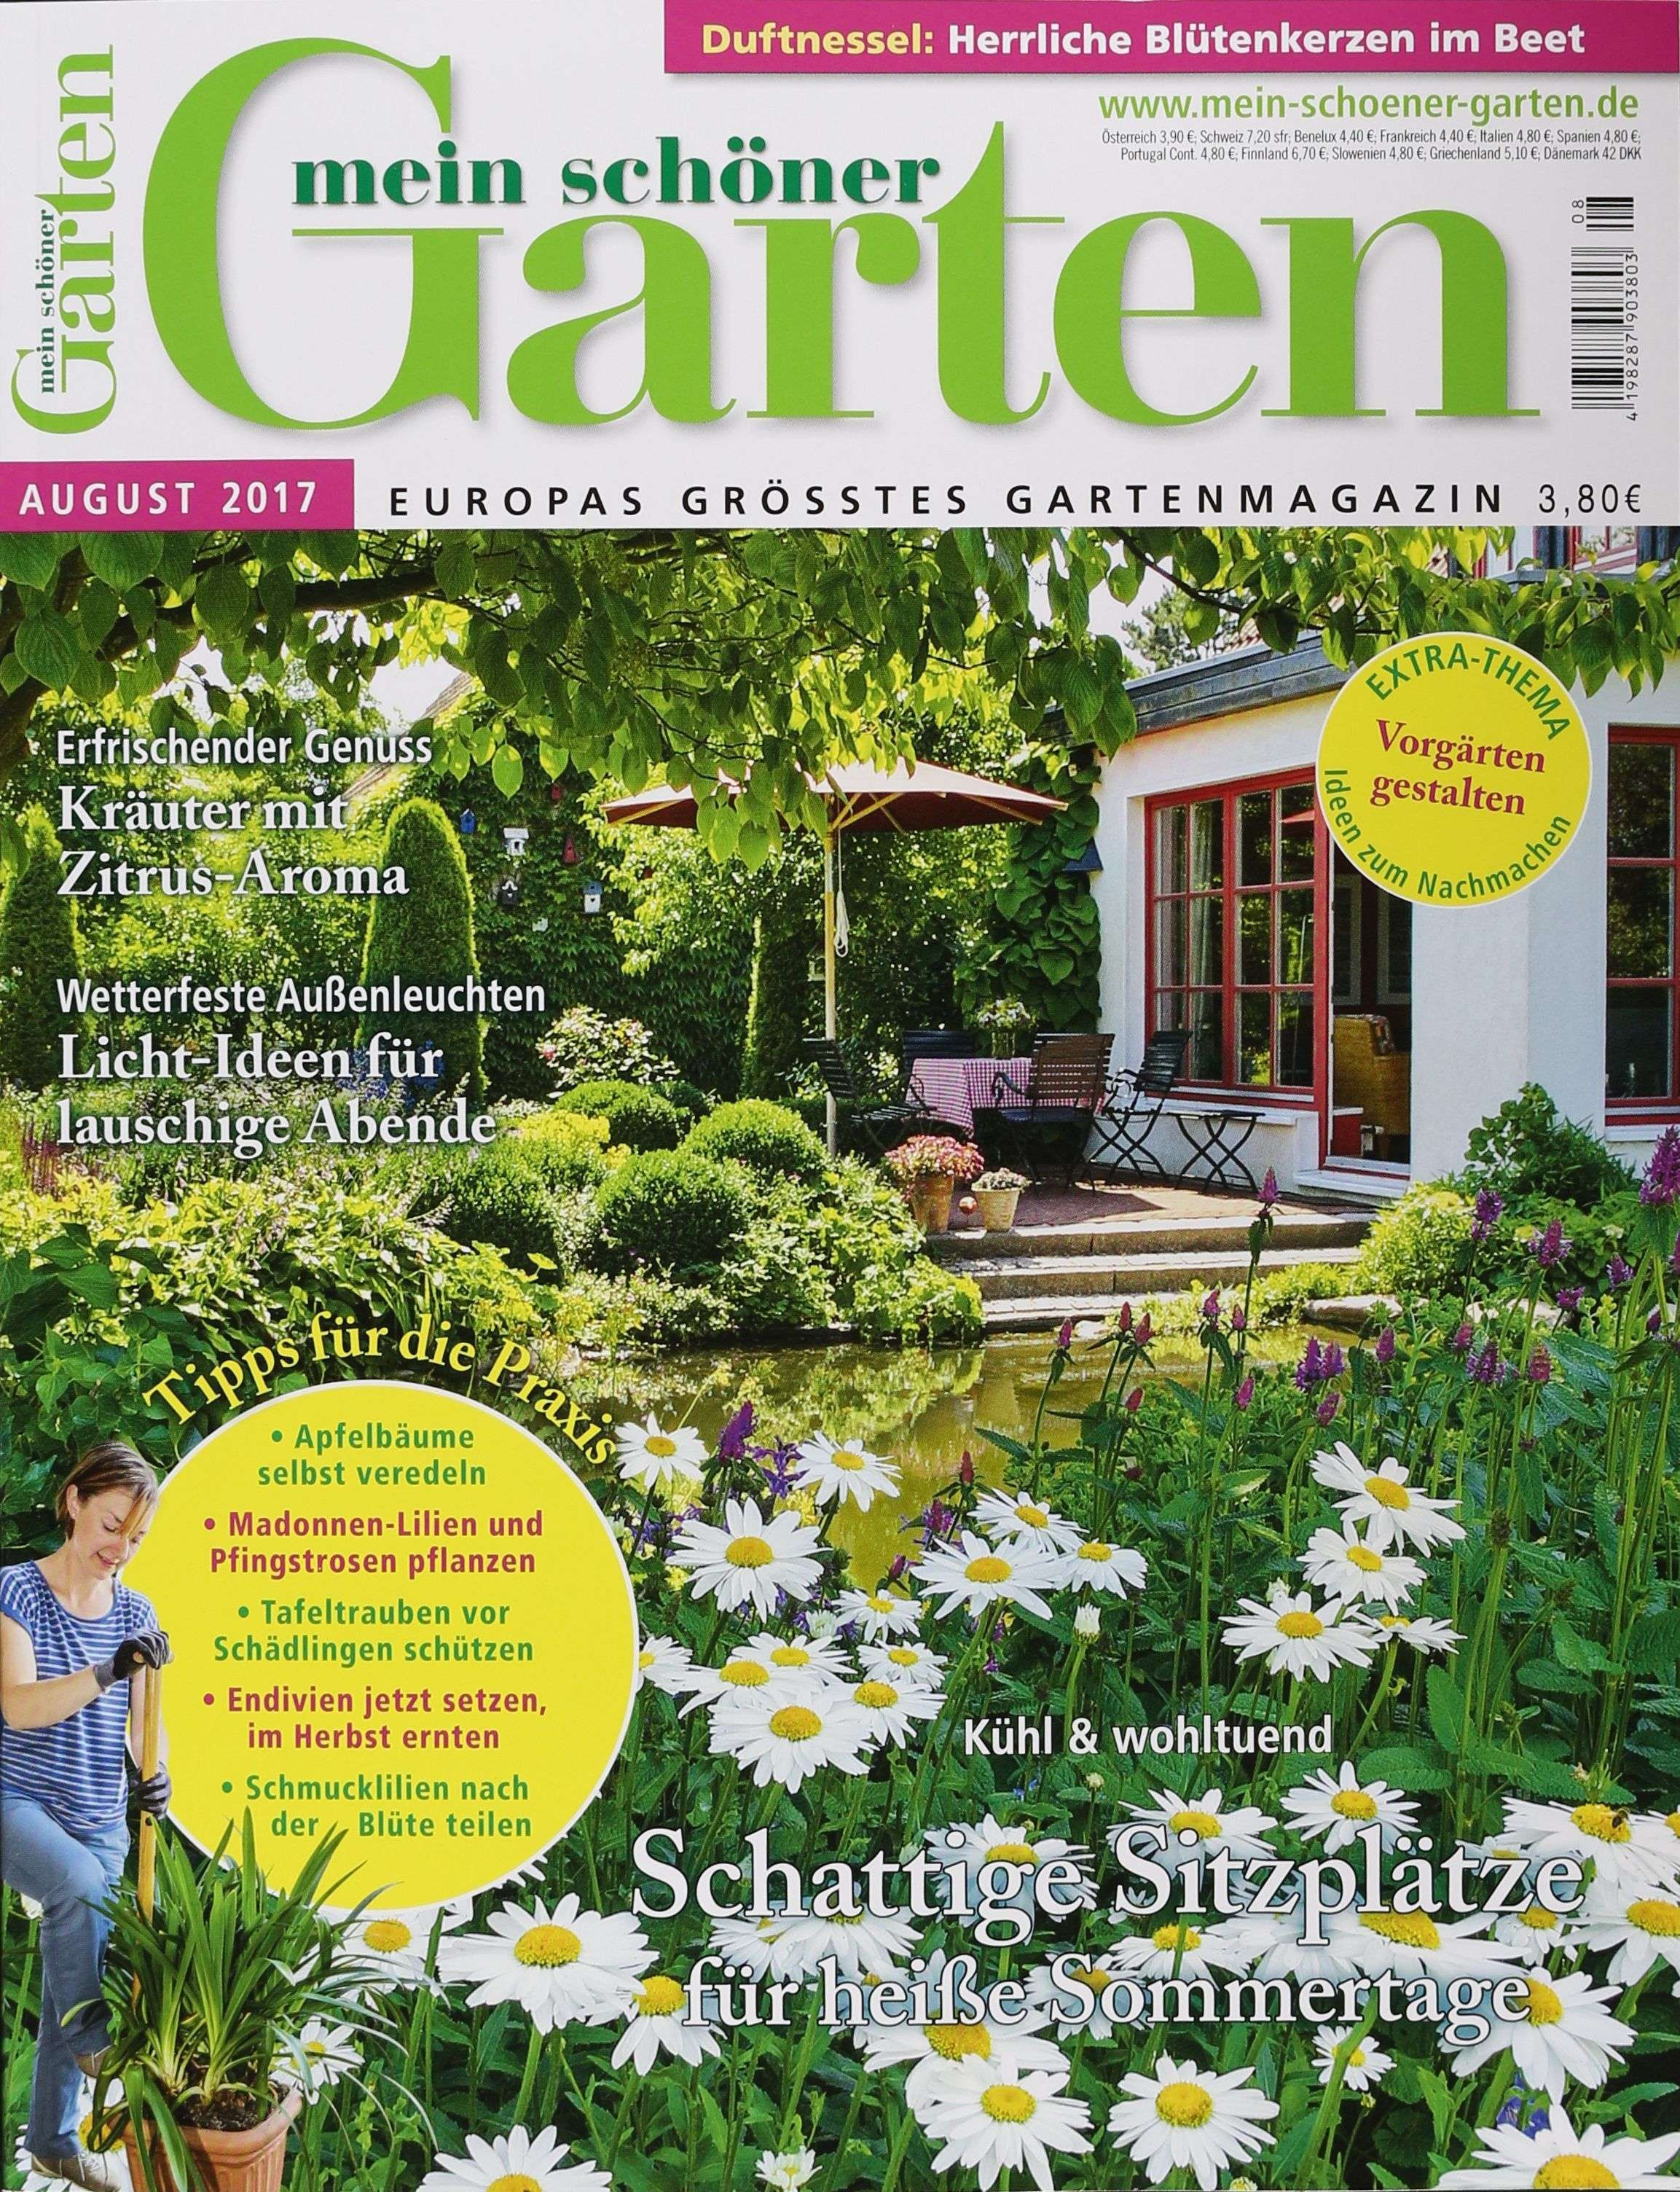 Beste 20 Mondkalender 2017 Garten - Beste Wohnkultur ...